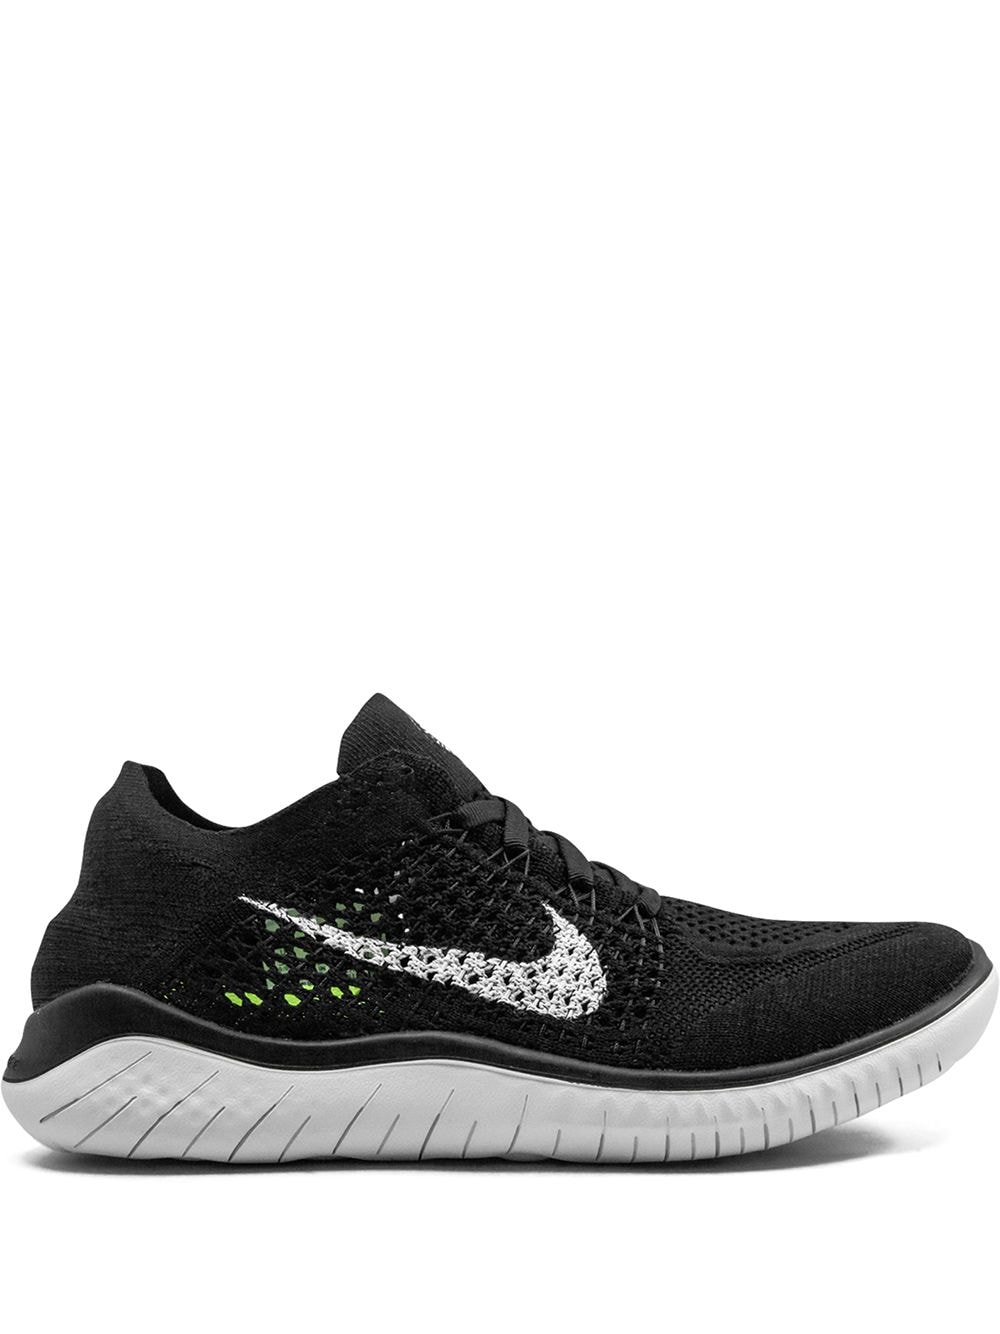 Image 1 of Nike Free RN Flyknit 2018 sneakers